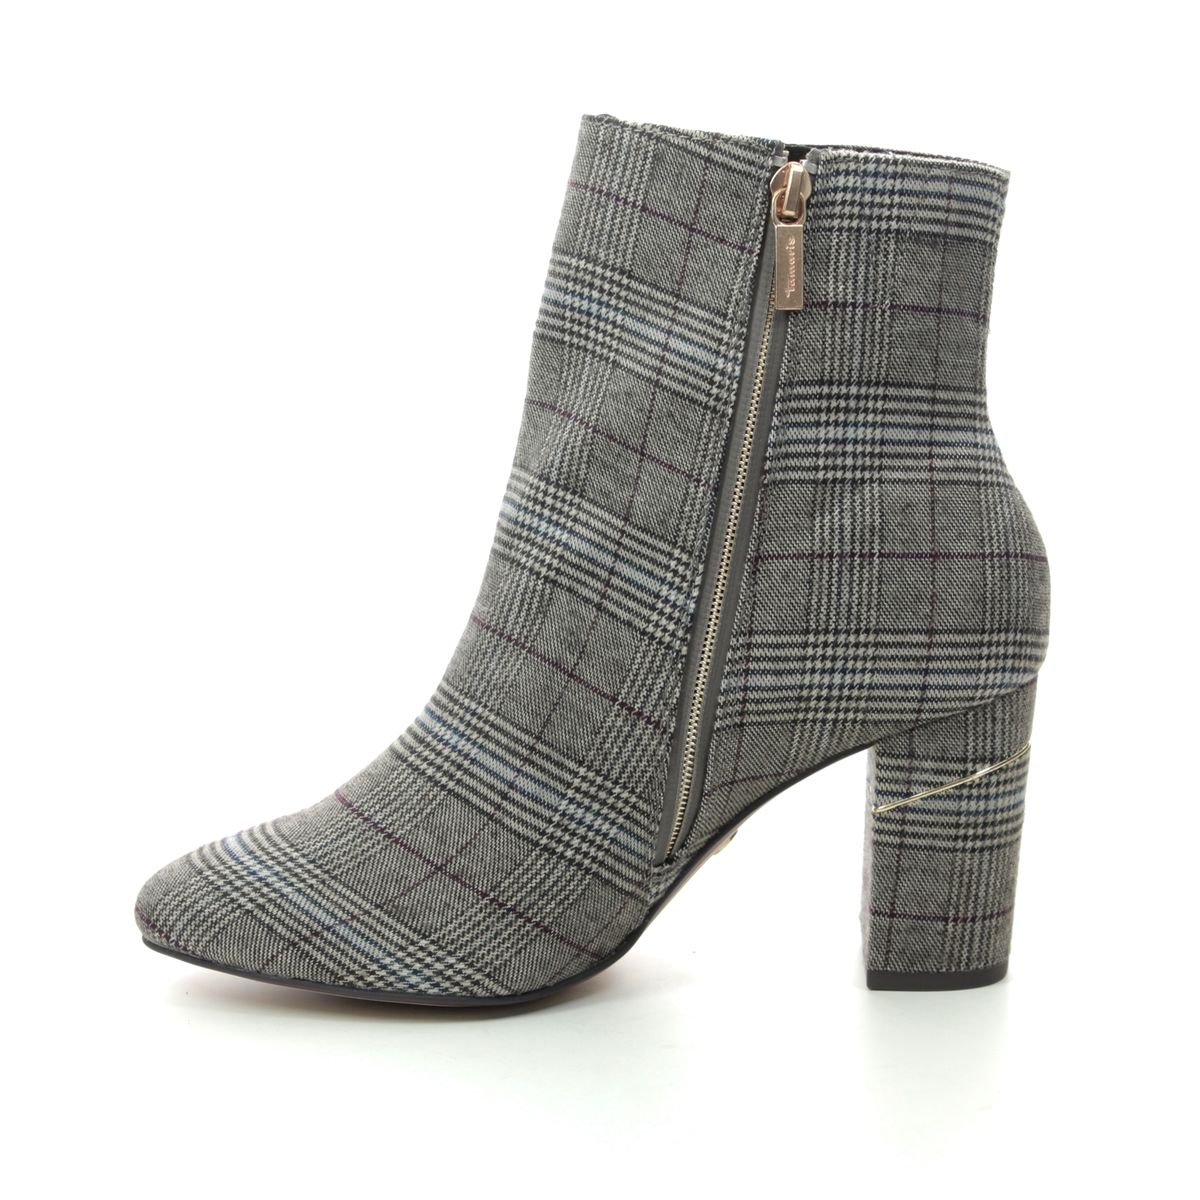 Tamaris Francesca 25330-33-901 Grey muti ankle boots